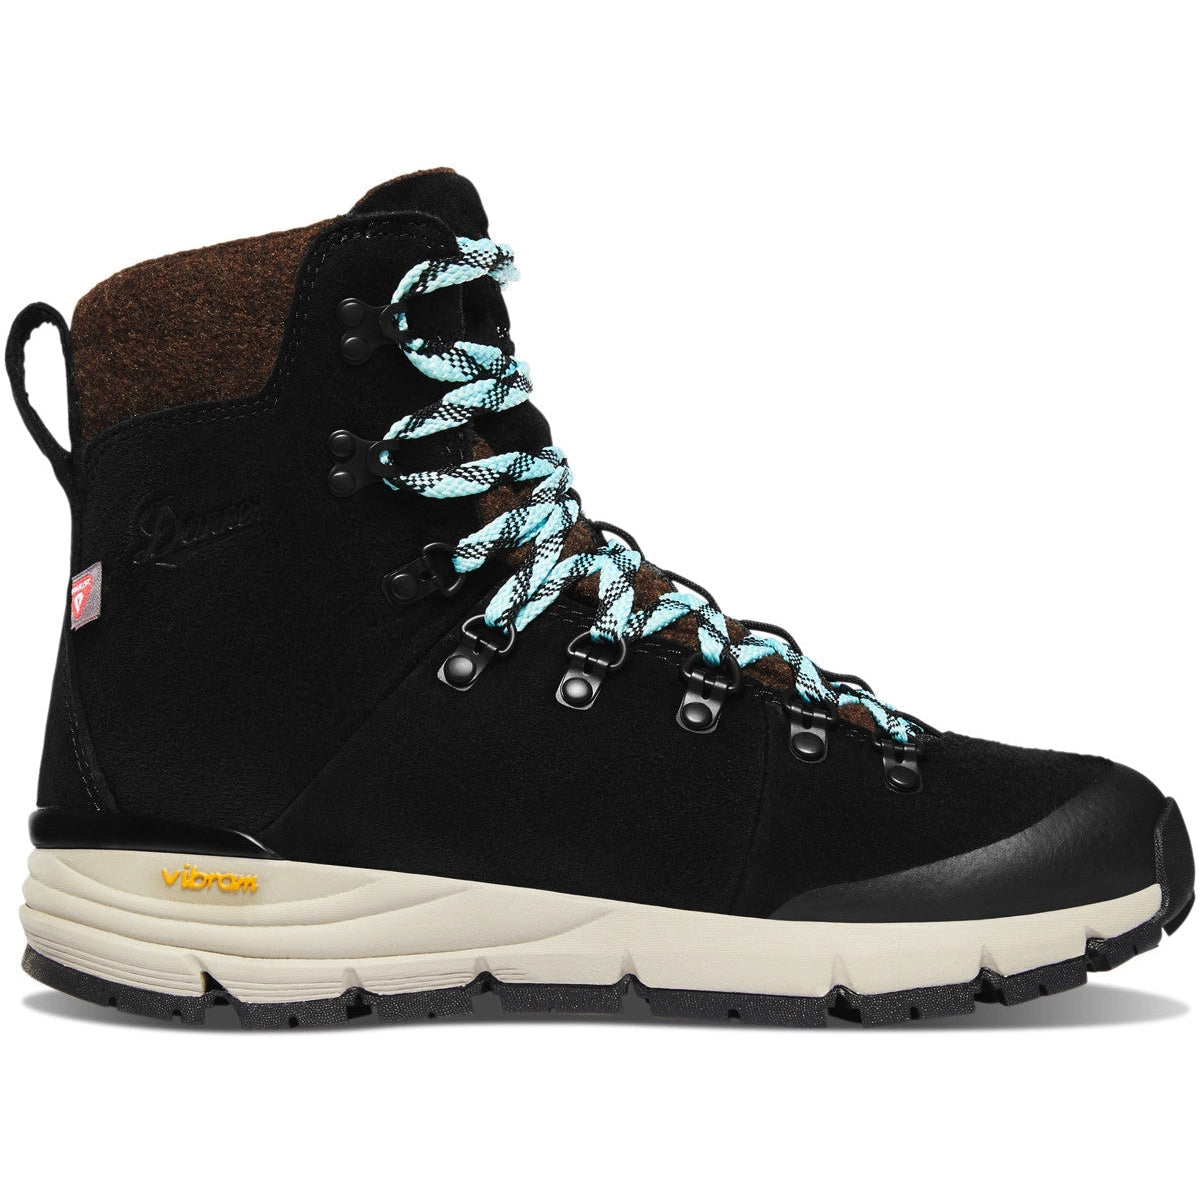 Danner Women's Arctic 600 7" WP Hiking Boot - Black/Spark Blue - 67340 5 / Medium / Black Spark Blue - Overlook Boots